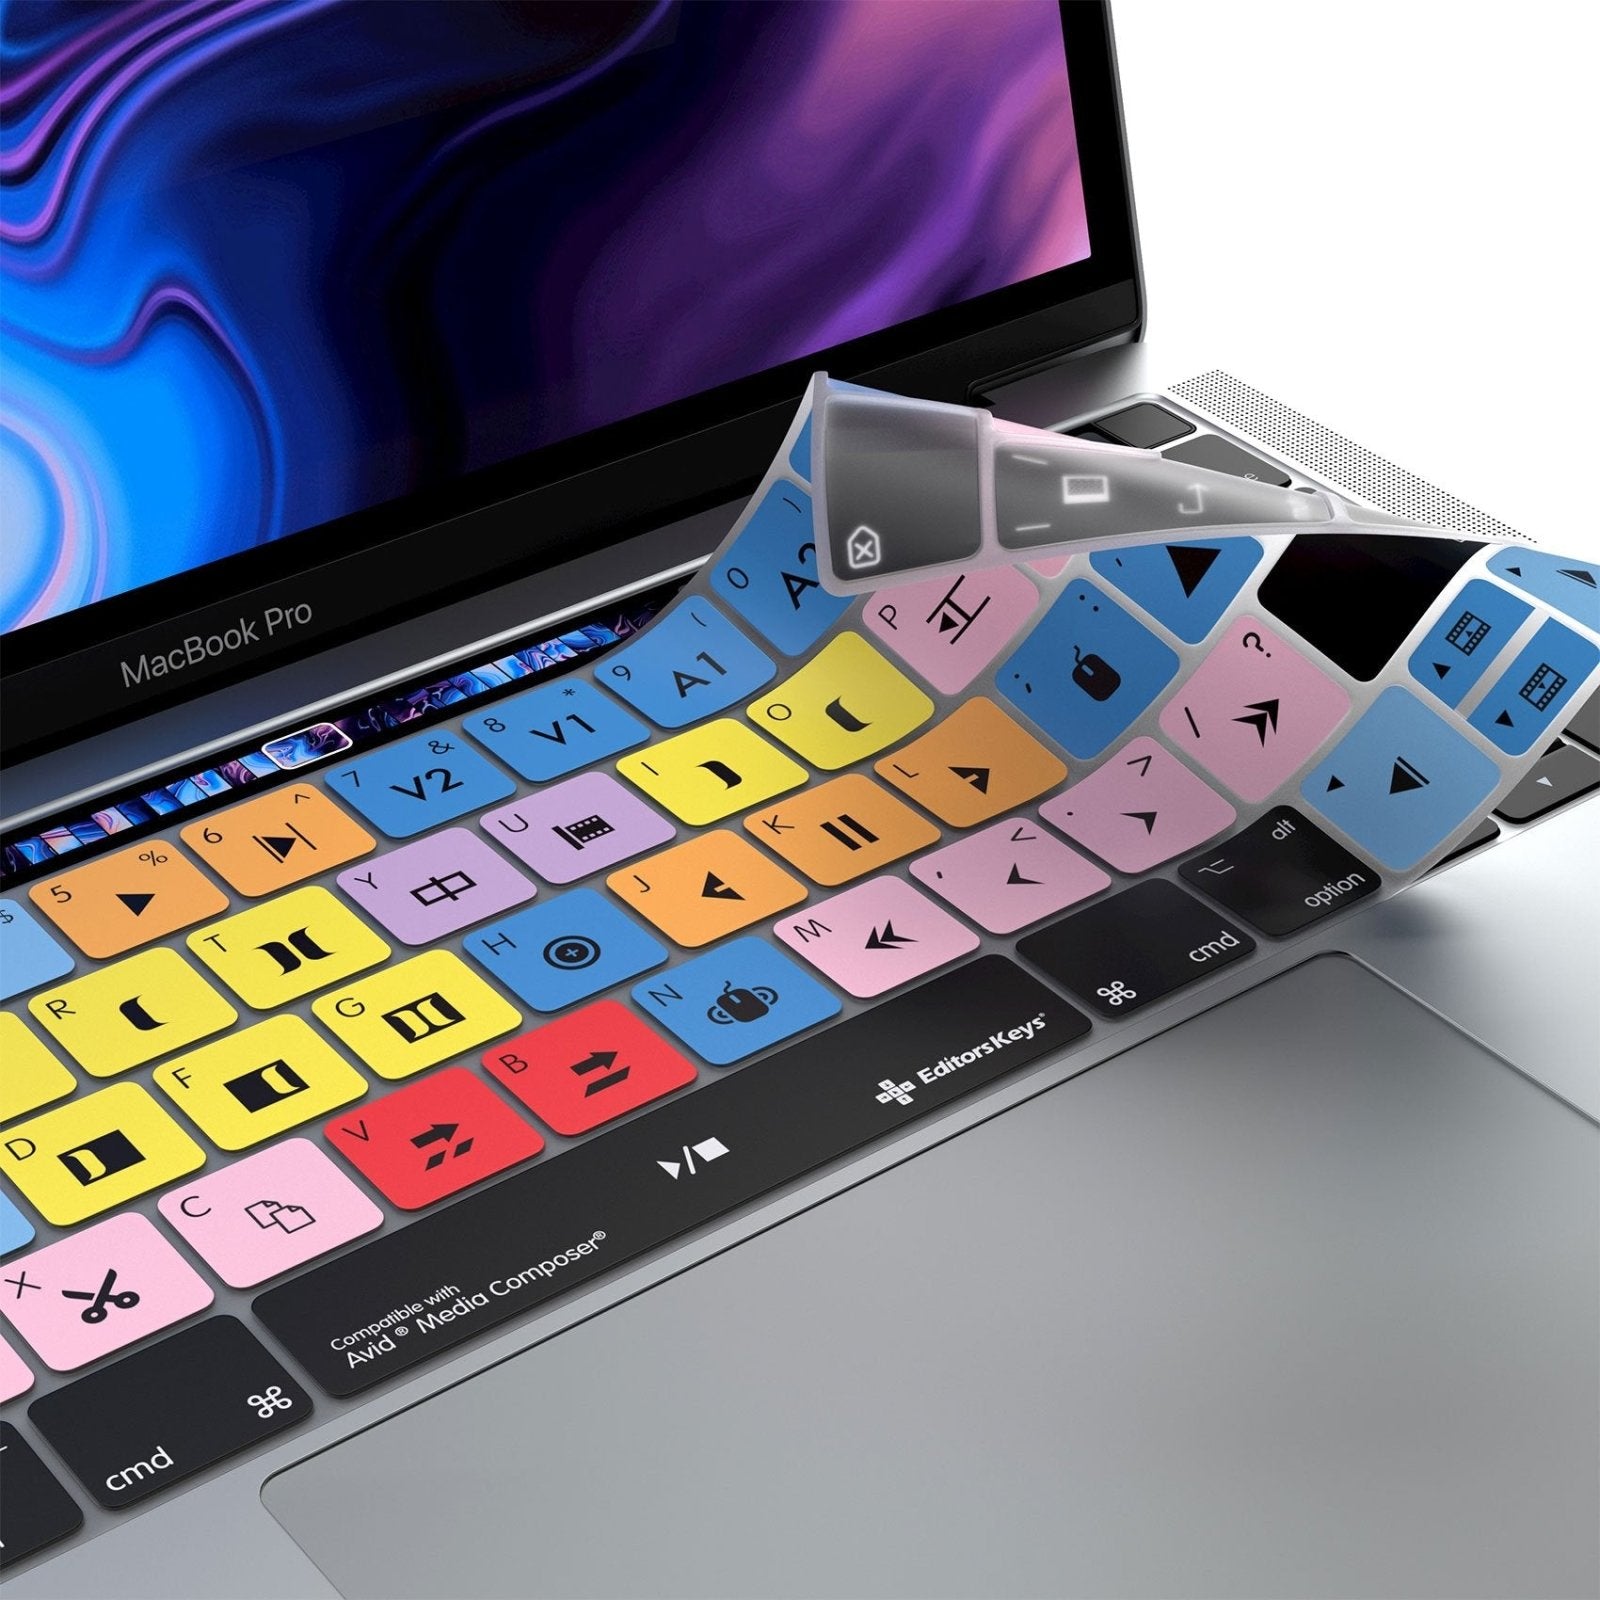 Avid Media Composer Keyboard Covers for MacBook and iMac - Editors Keys